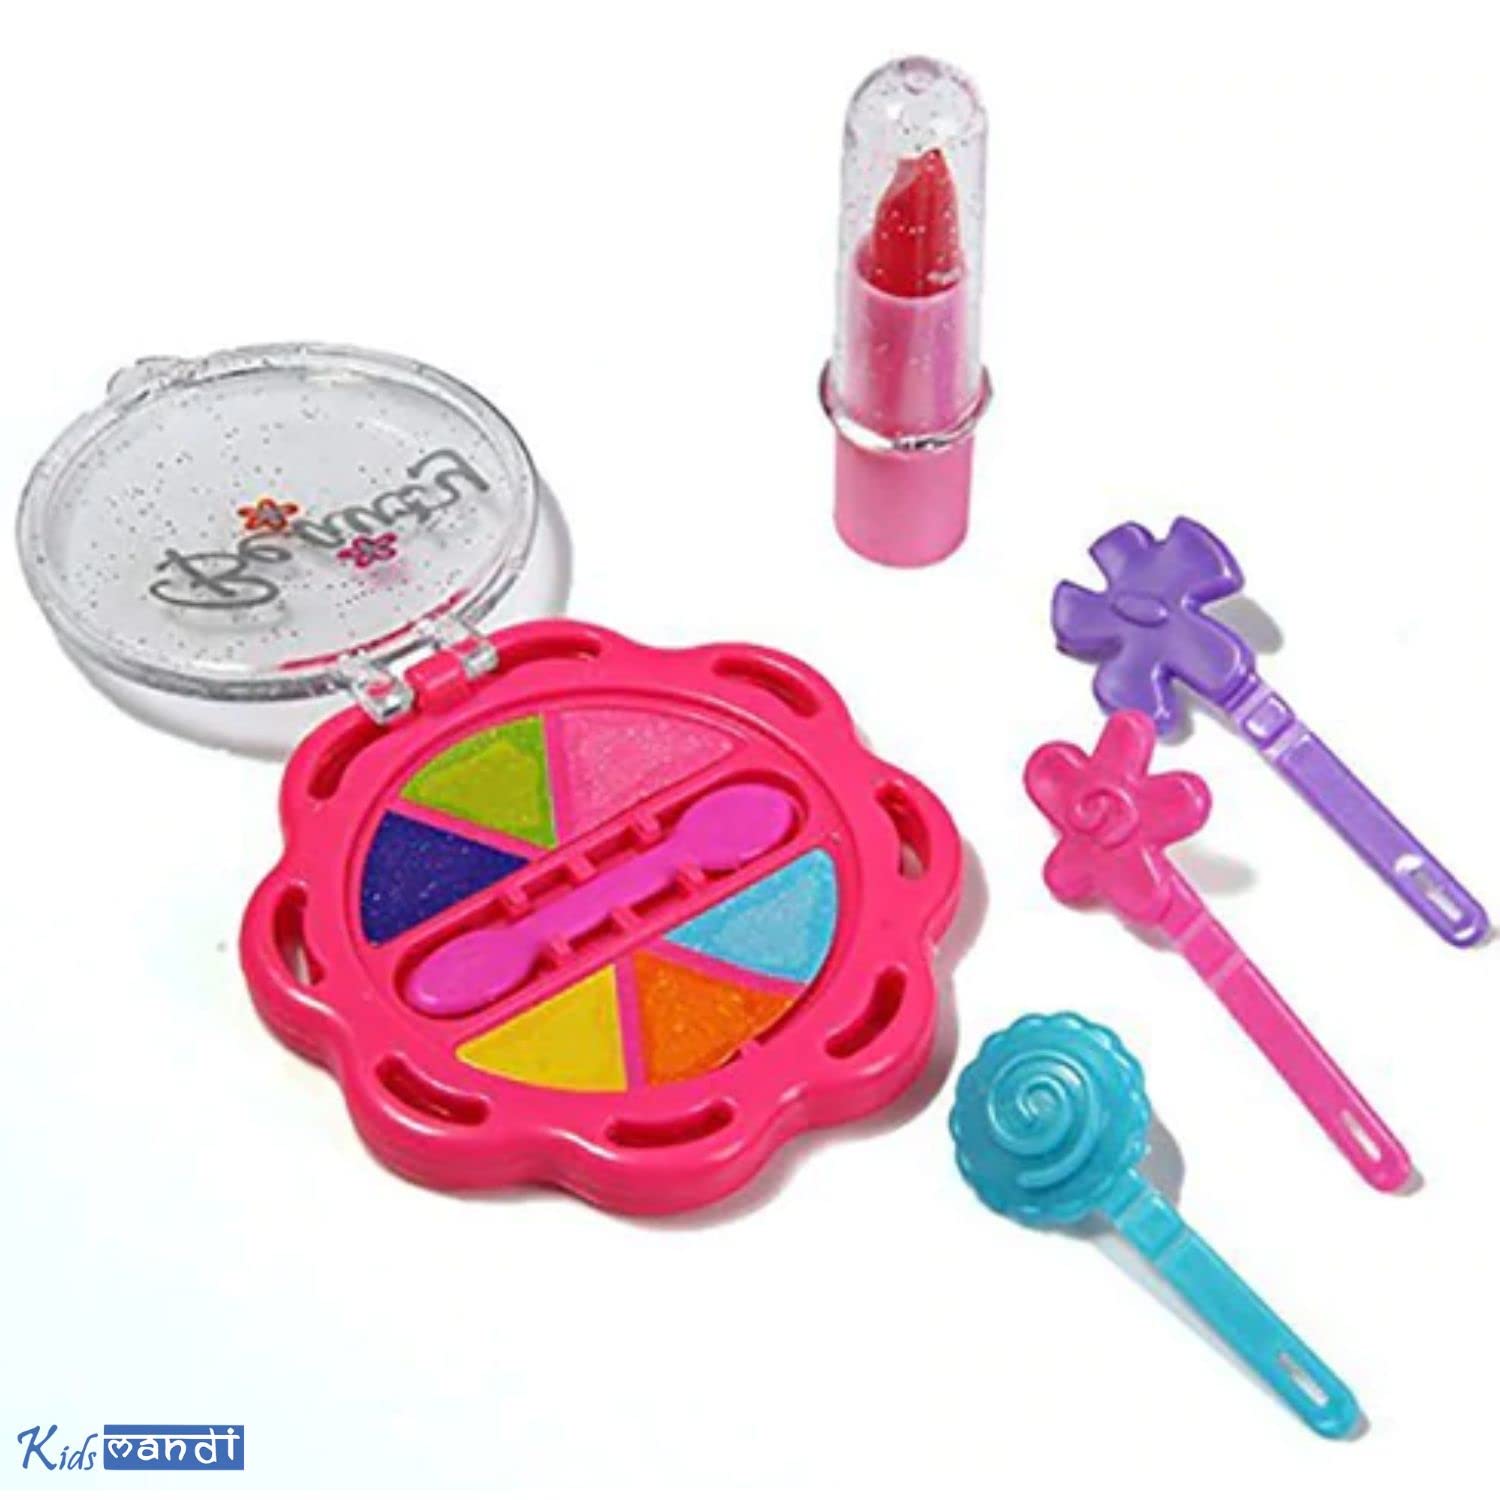 Kids Mandi Pretend Play Make-up Case with Cosmetic Set